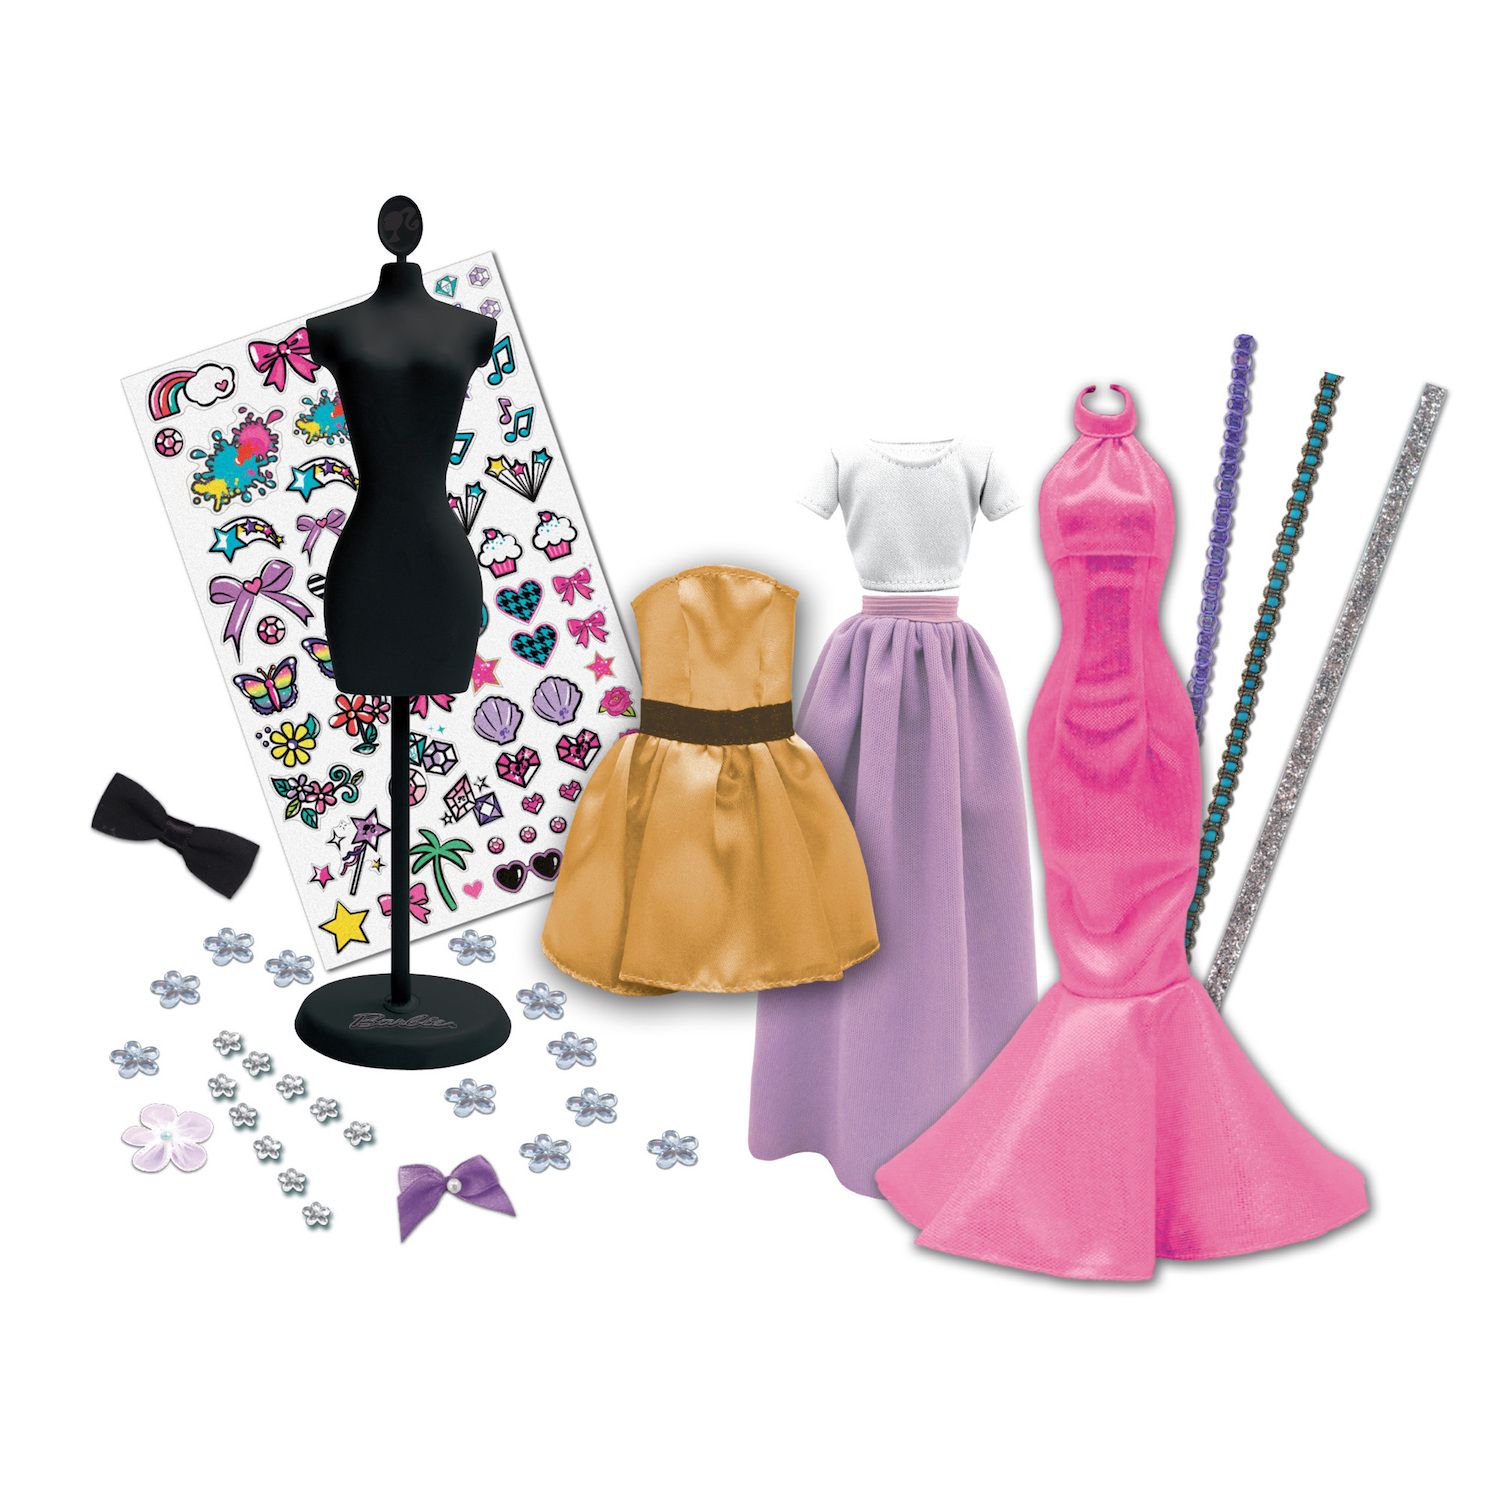 barbie be a fashion designer doll dress up kit